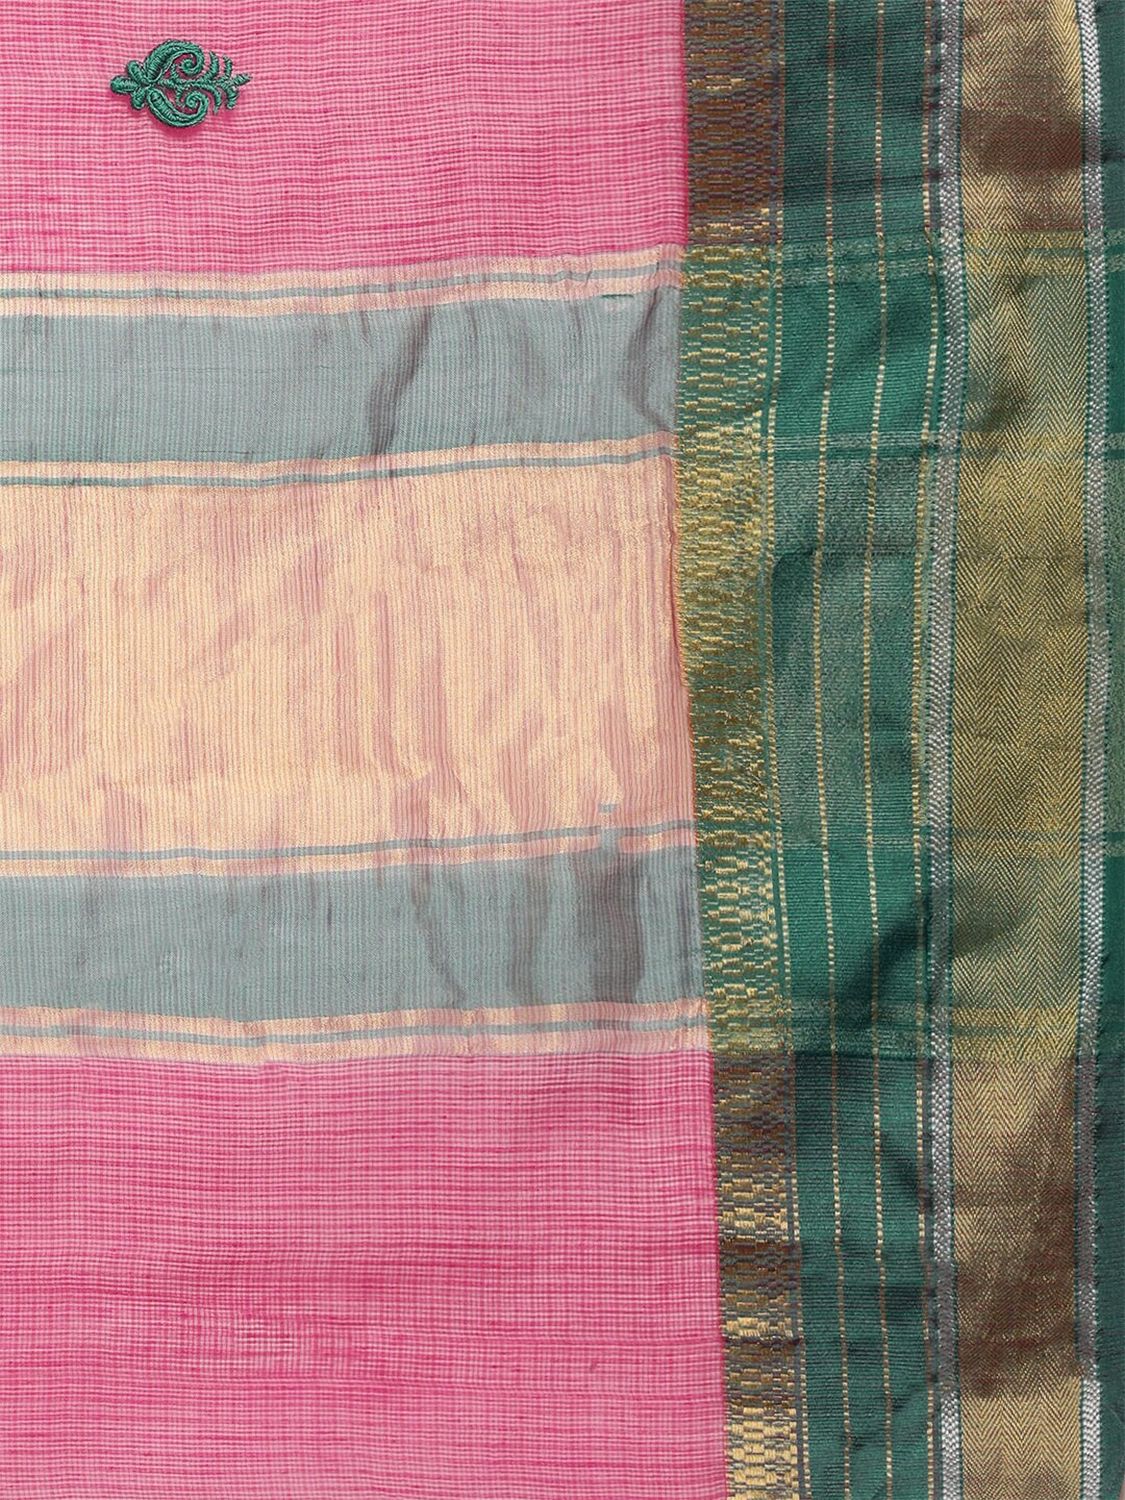 Leeza Store Cotton Blend Embroidered Ethnic motifs Golden Zari Border Kota Doria Saree With Blouse Piece - Pink